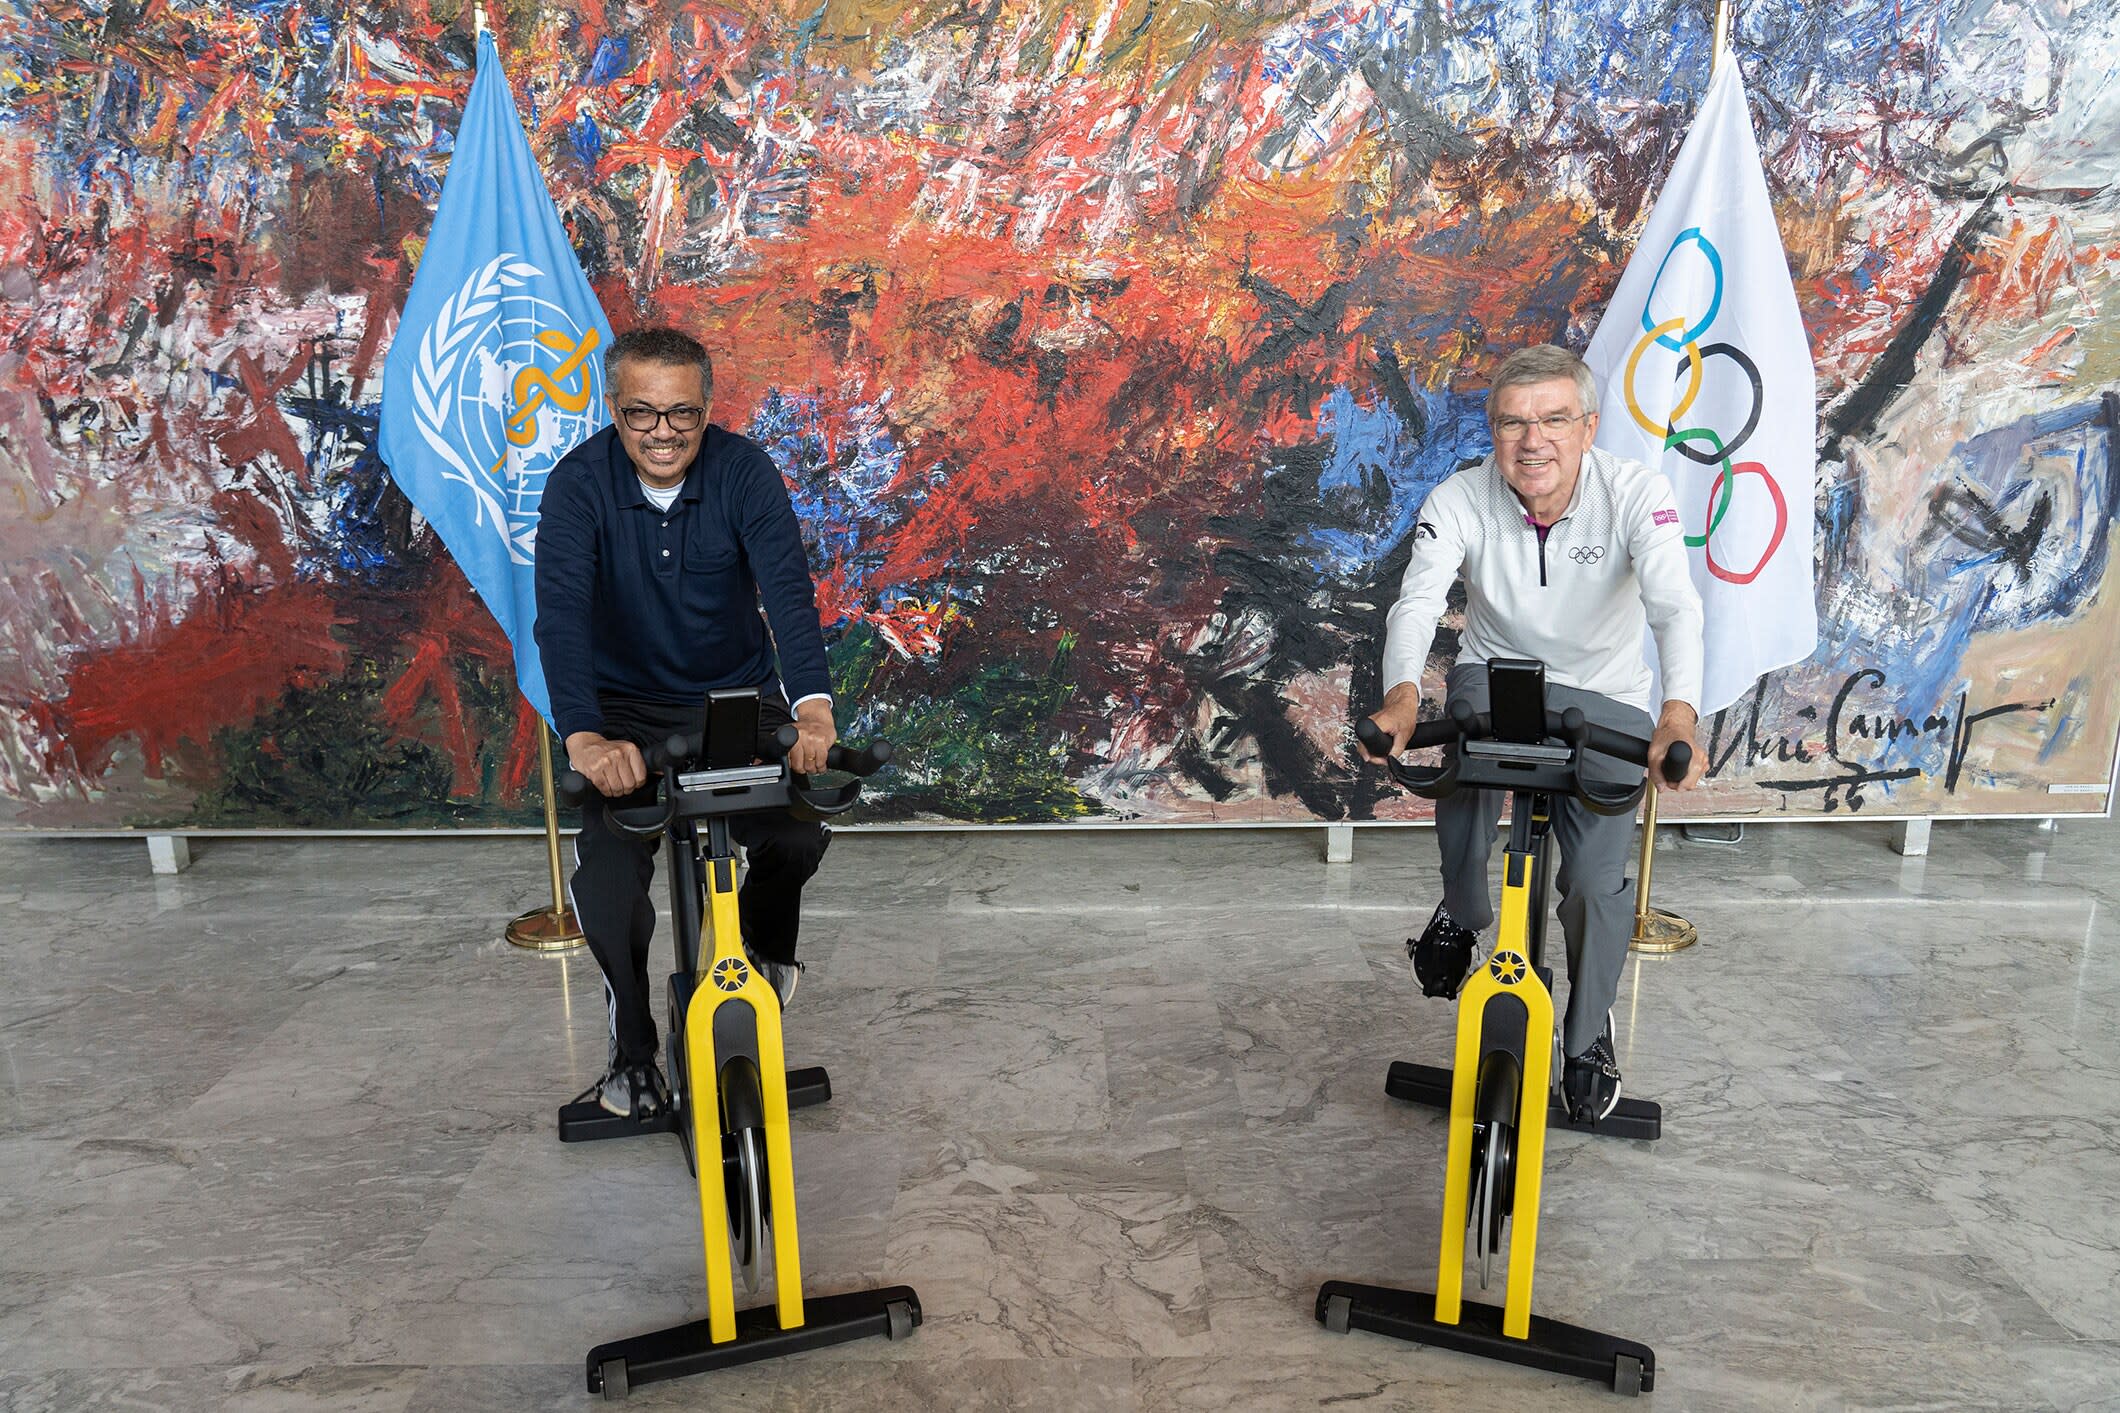 IOC/Greg Martin